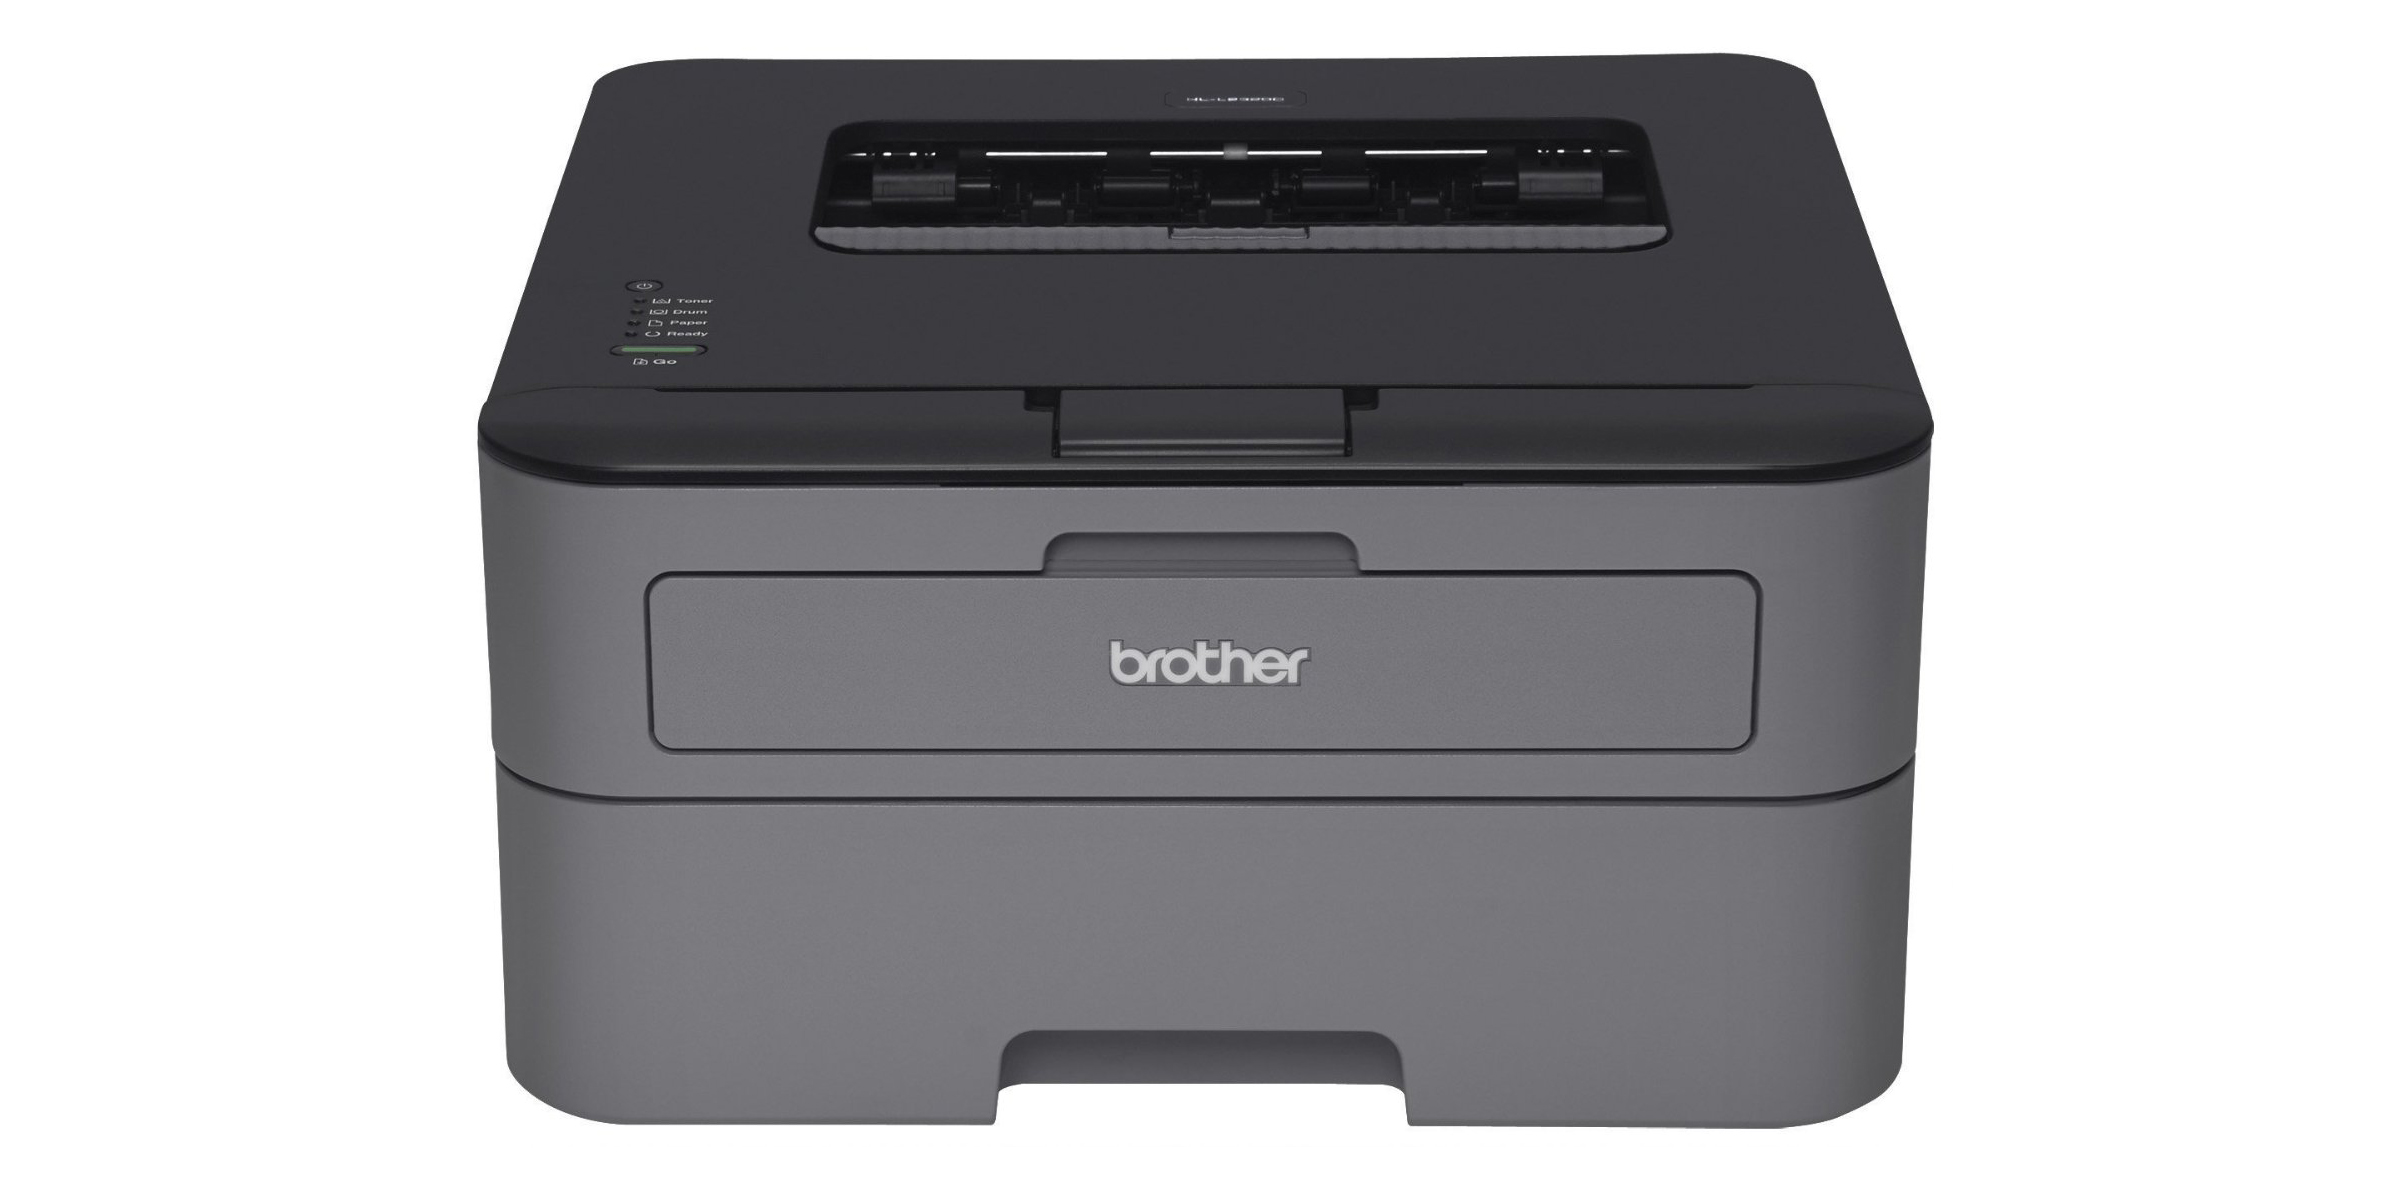 brother printer black friday deals